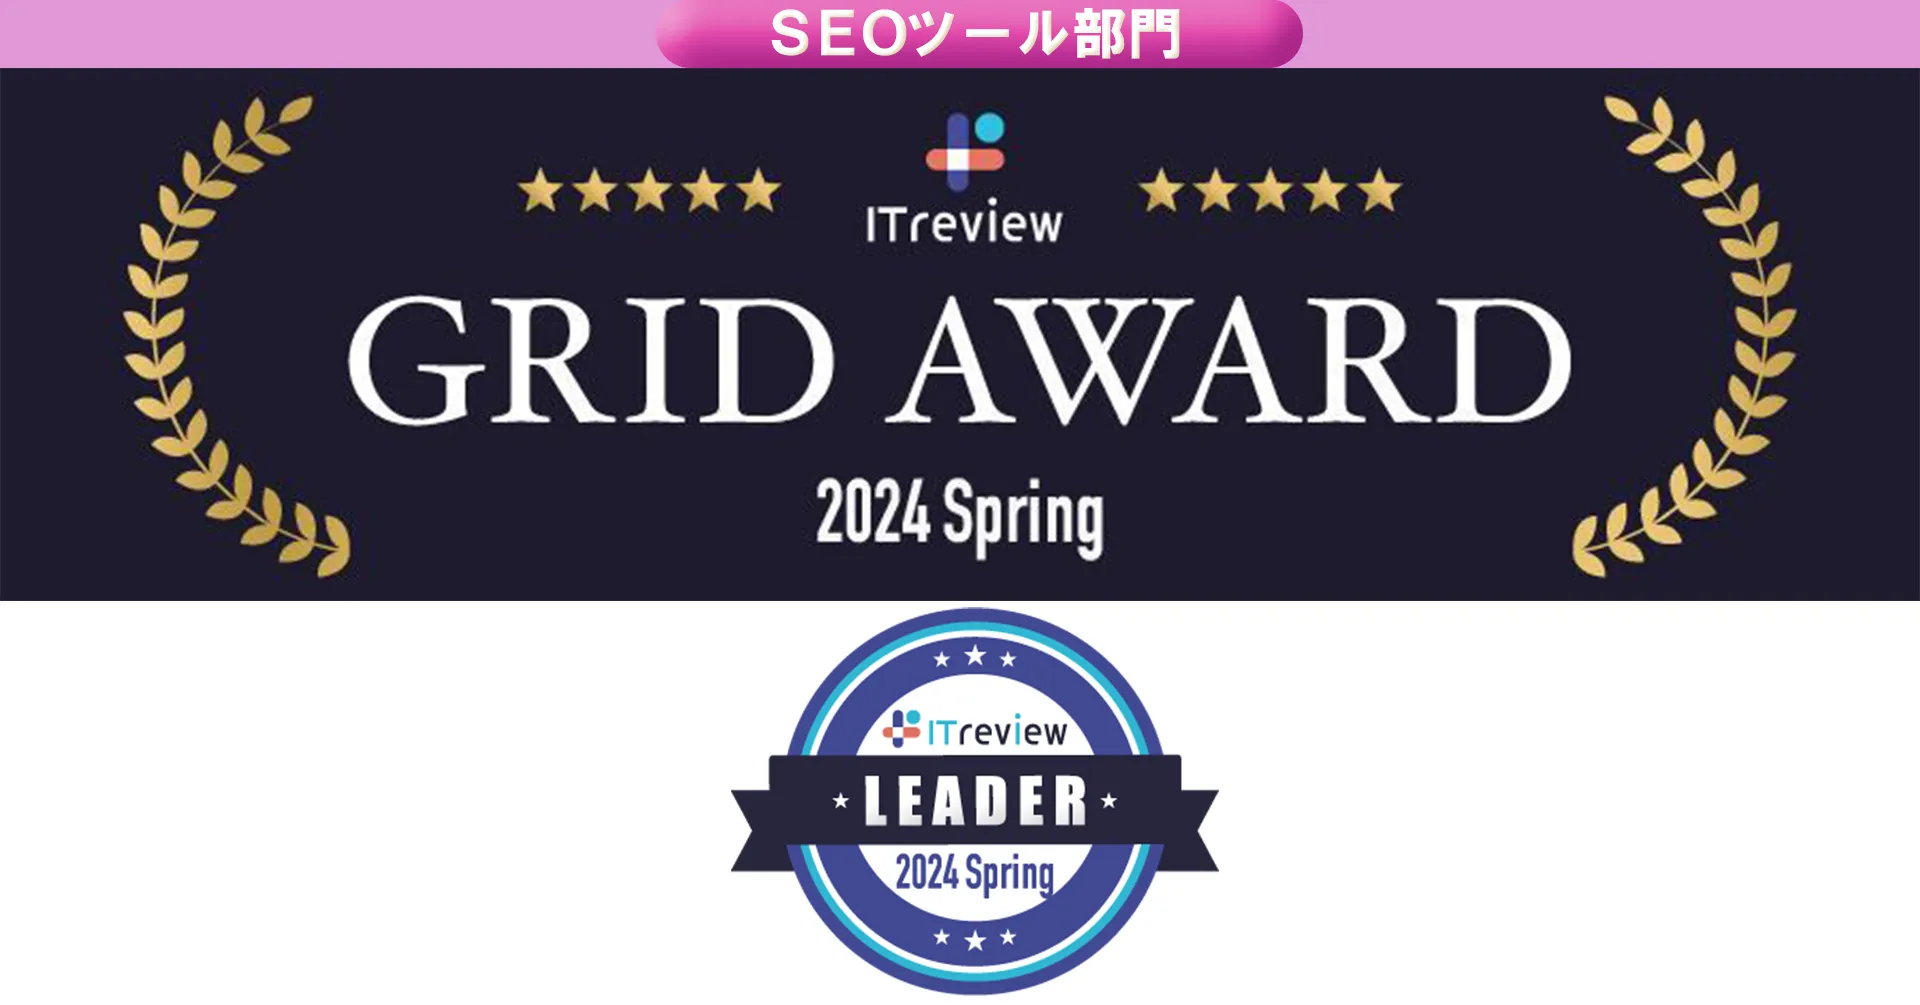 ITreview Grid Award 2024 Spring 「SEOツール」部門 最高賞「Leader」を受賞